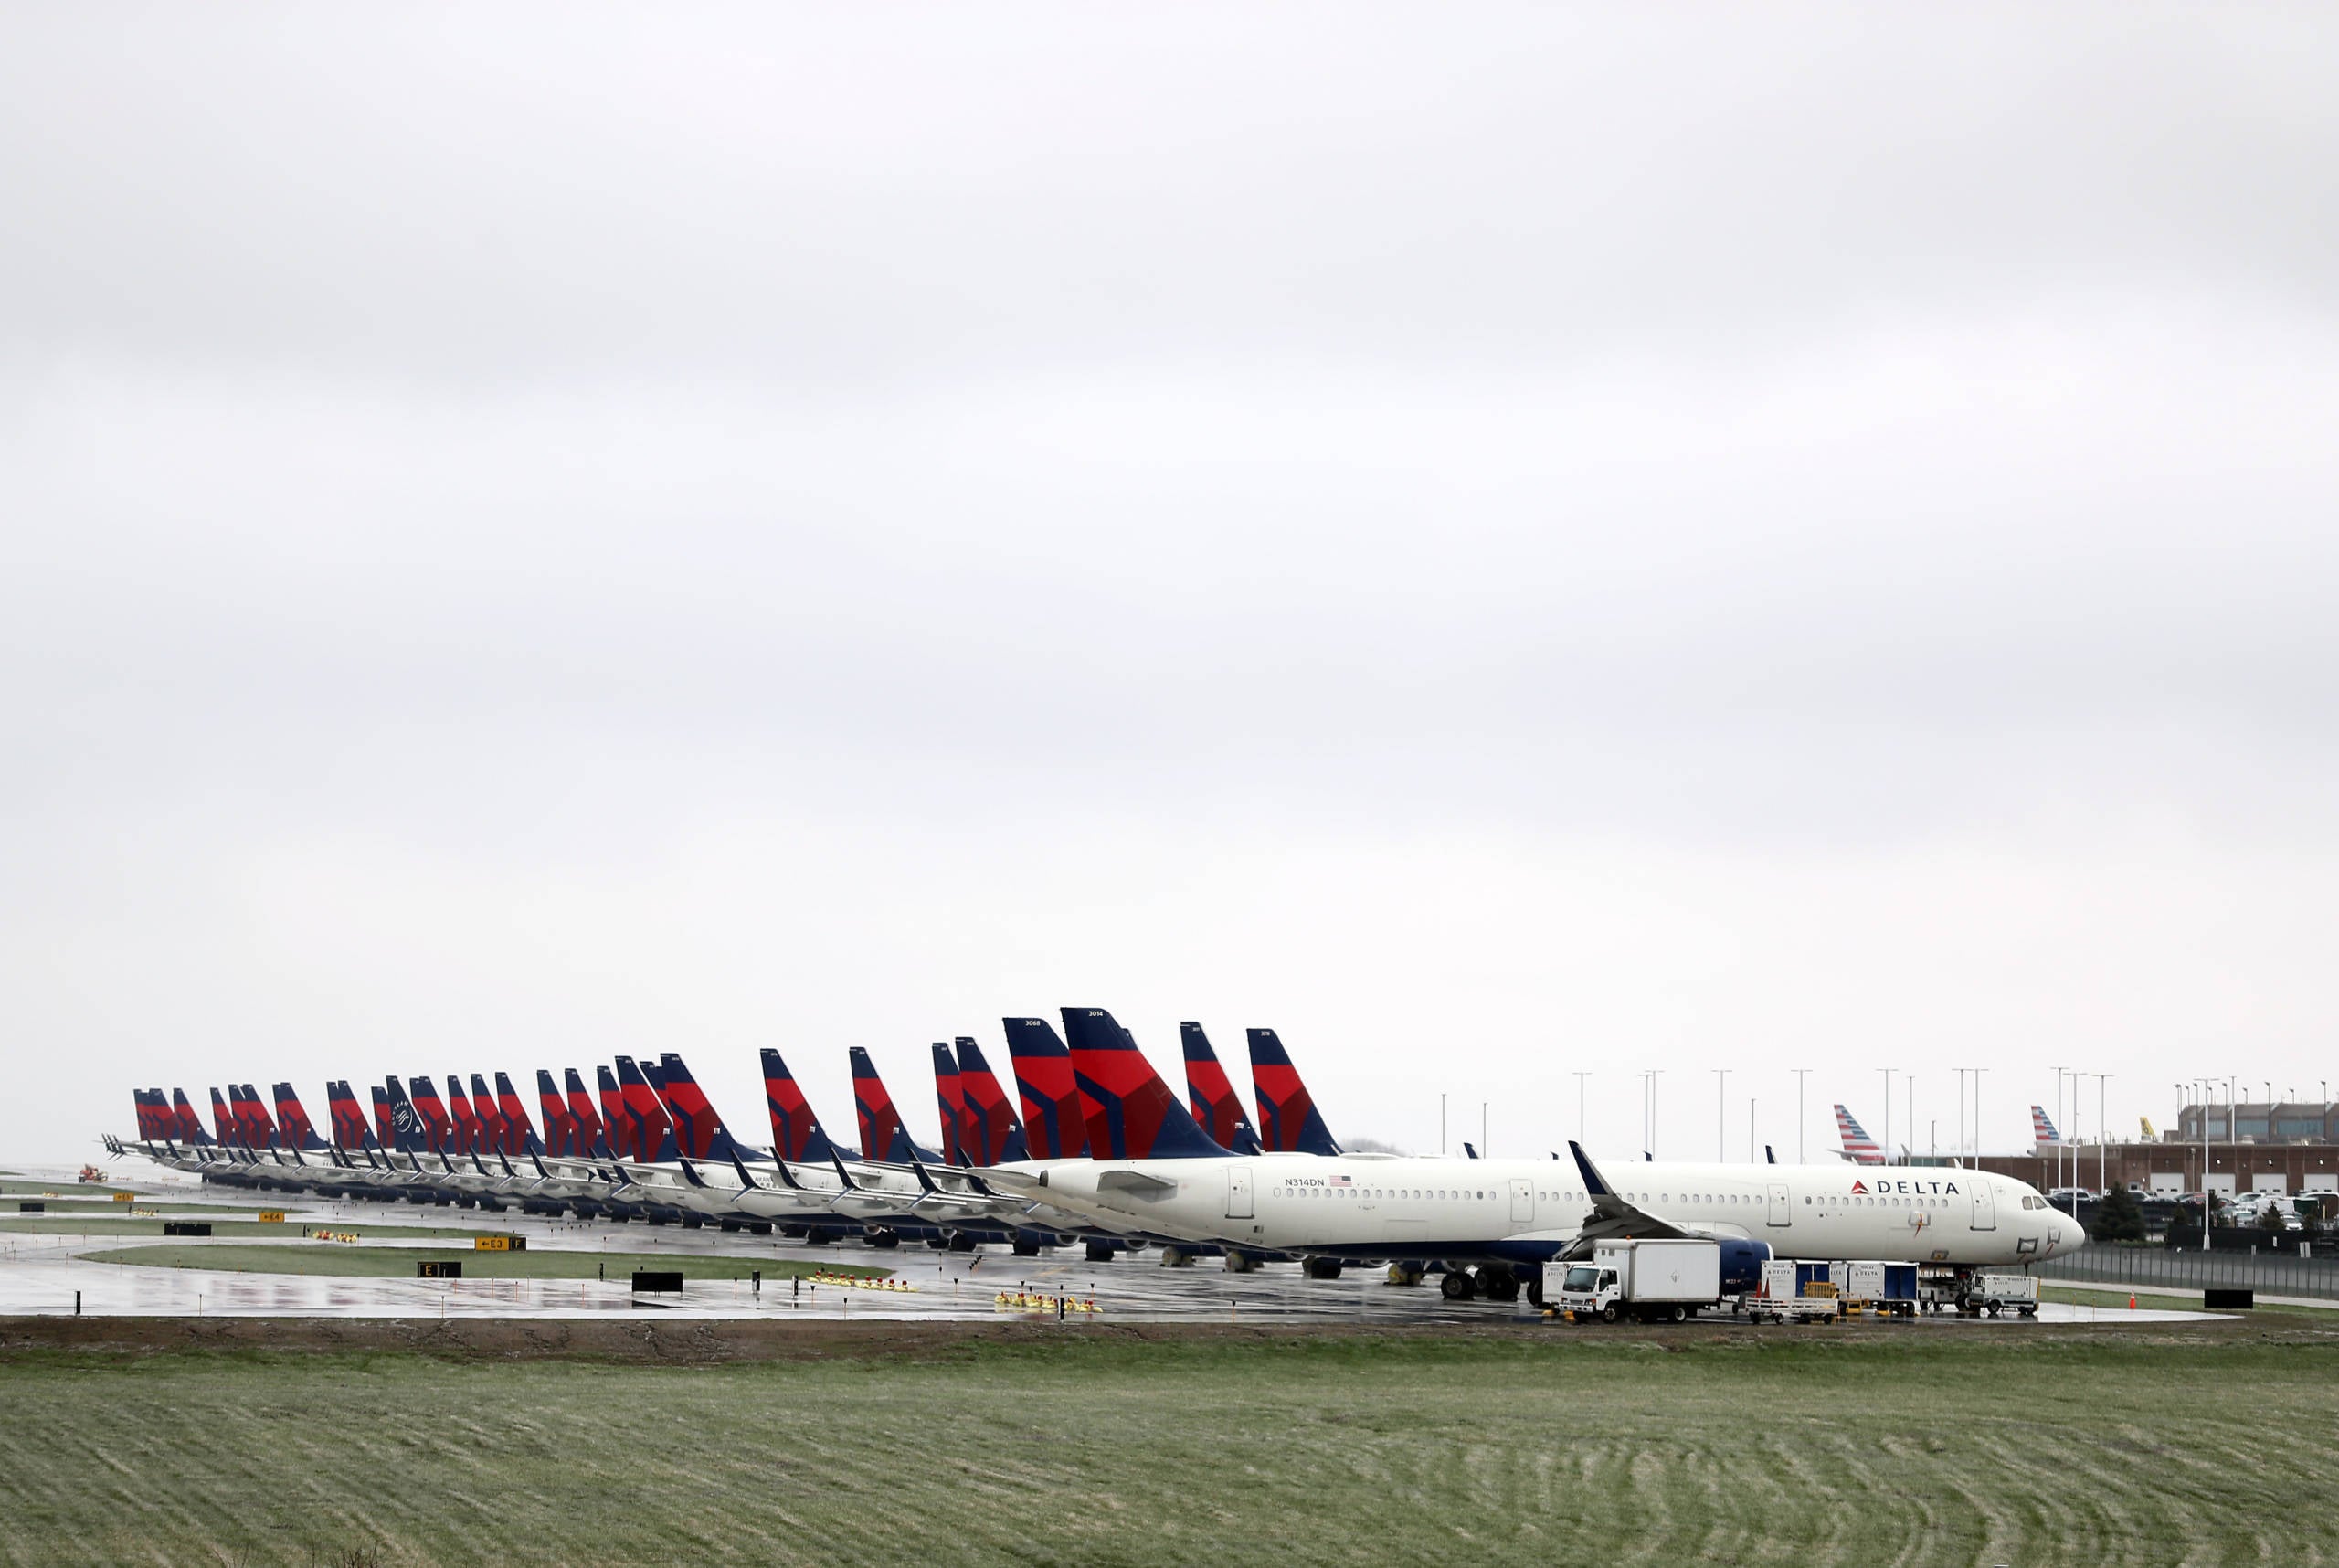 Delta Planes Sit Idle At Kansas City International Airport